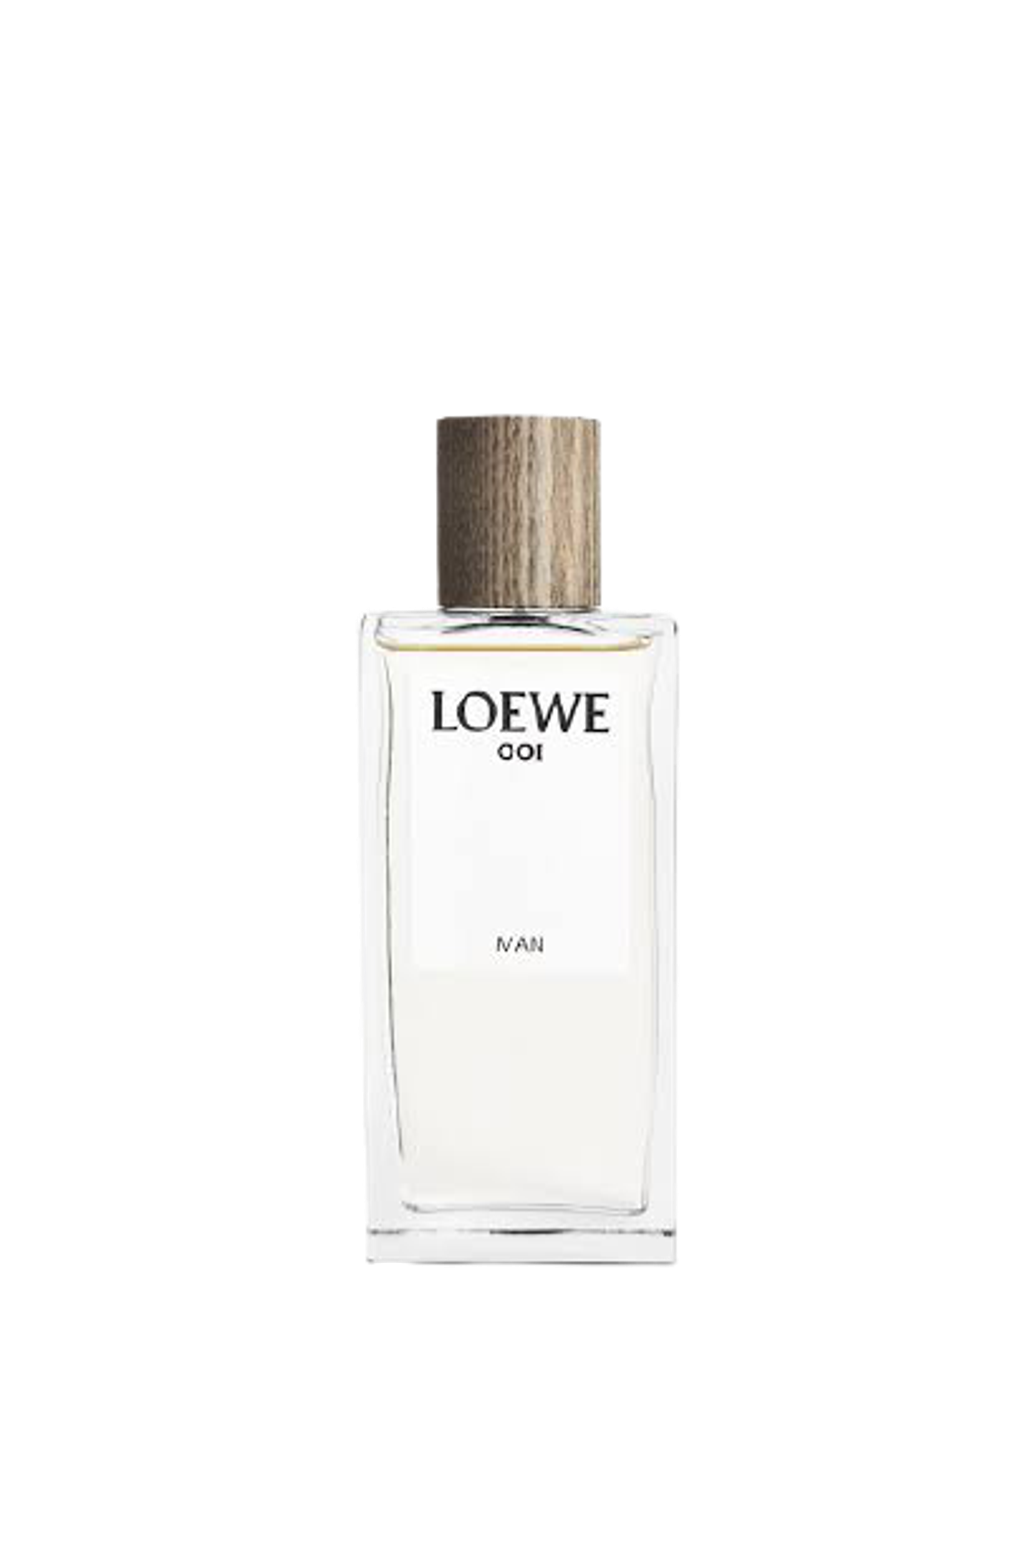 LOEWE 001 MAN EDP 100ML [Authentic] – LuxuryfragranceStore.com